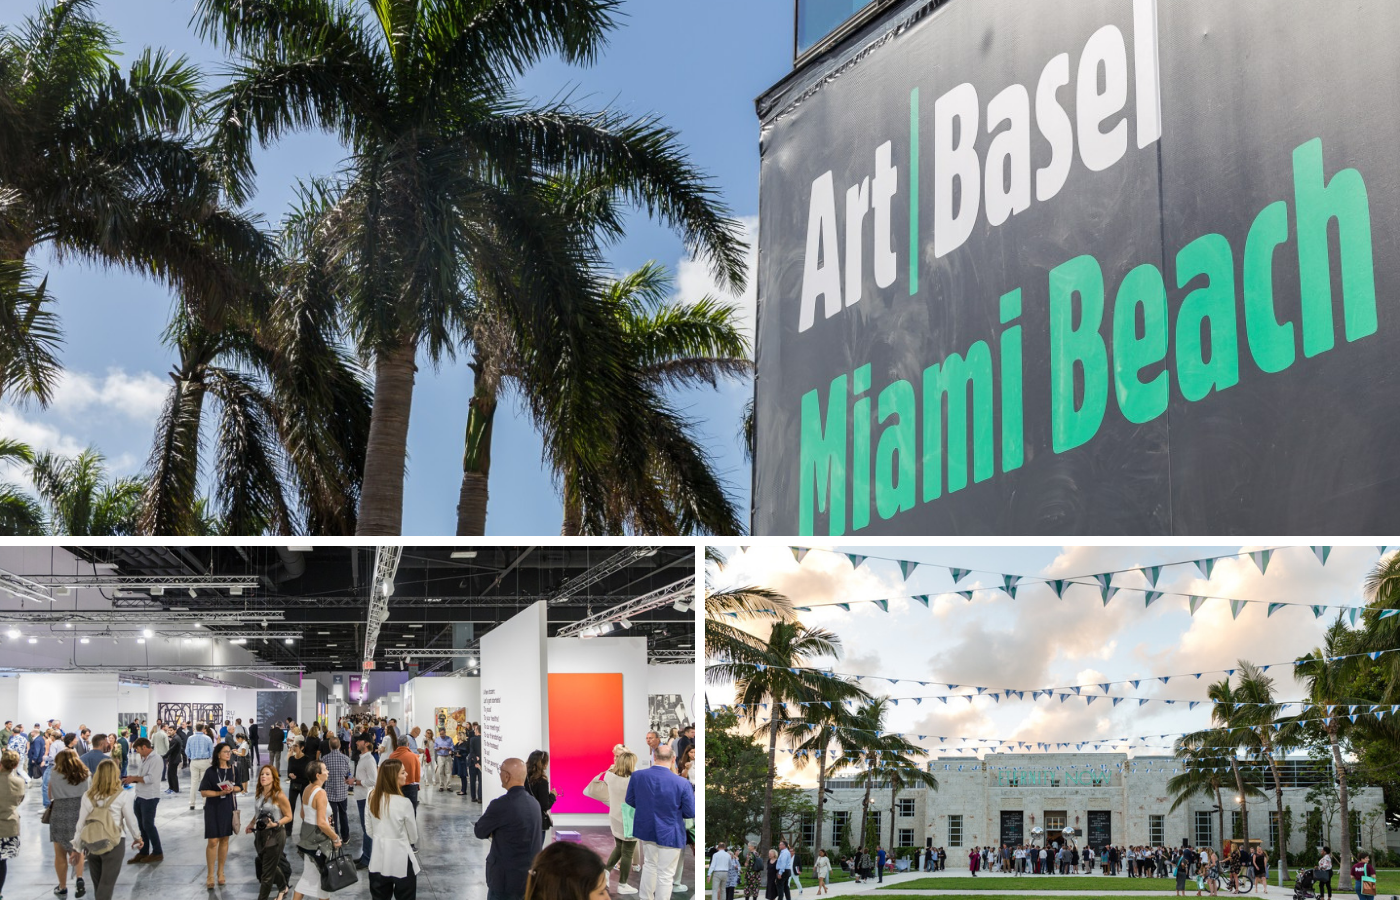 Event: Art Basel Miami Beach